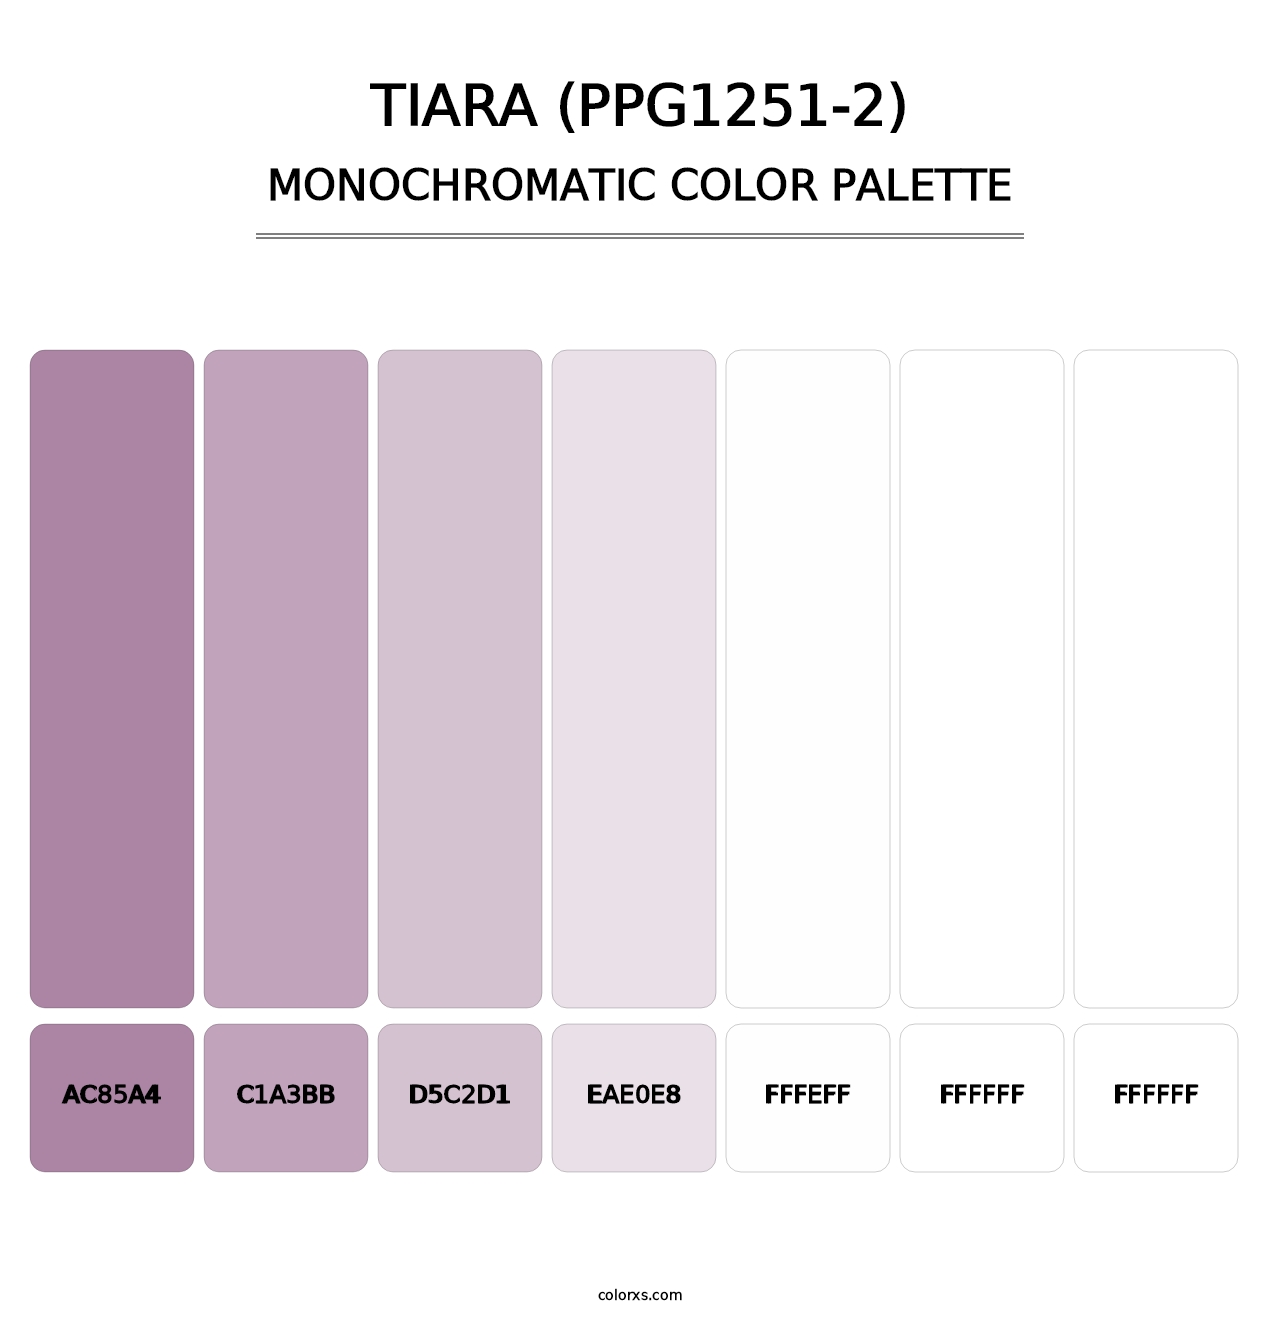 Tiara (PPG1251-2) - Monochromatic Color Palette